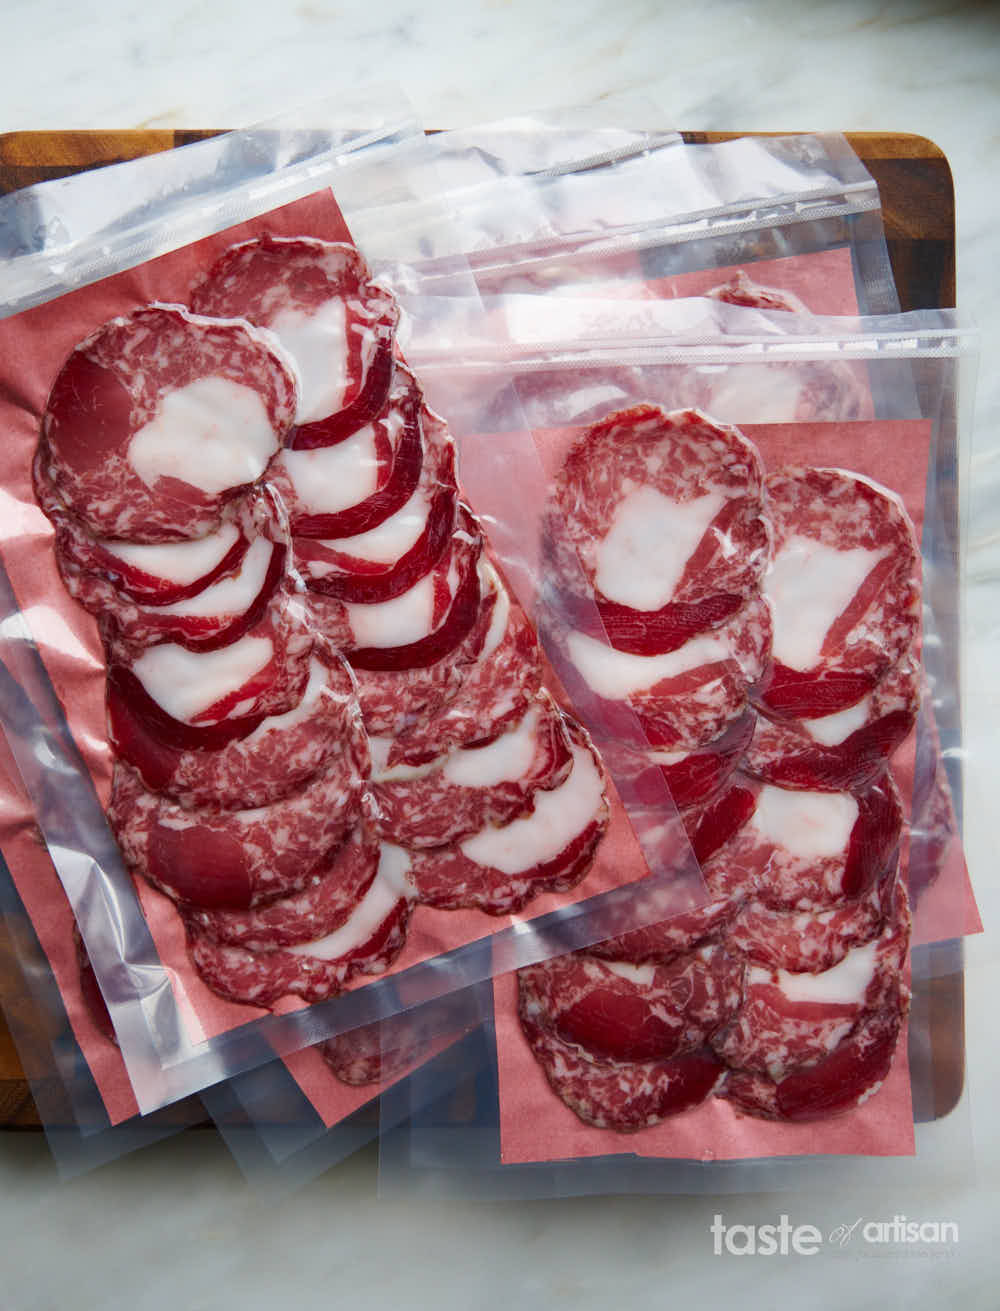 Sopressata salami sliced and vacuum packaged.